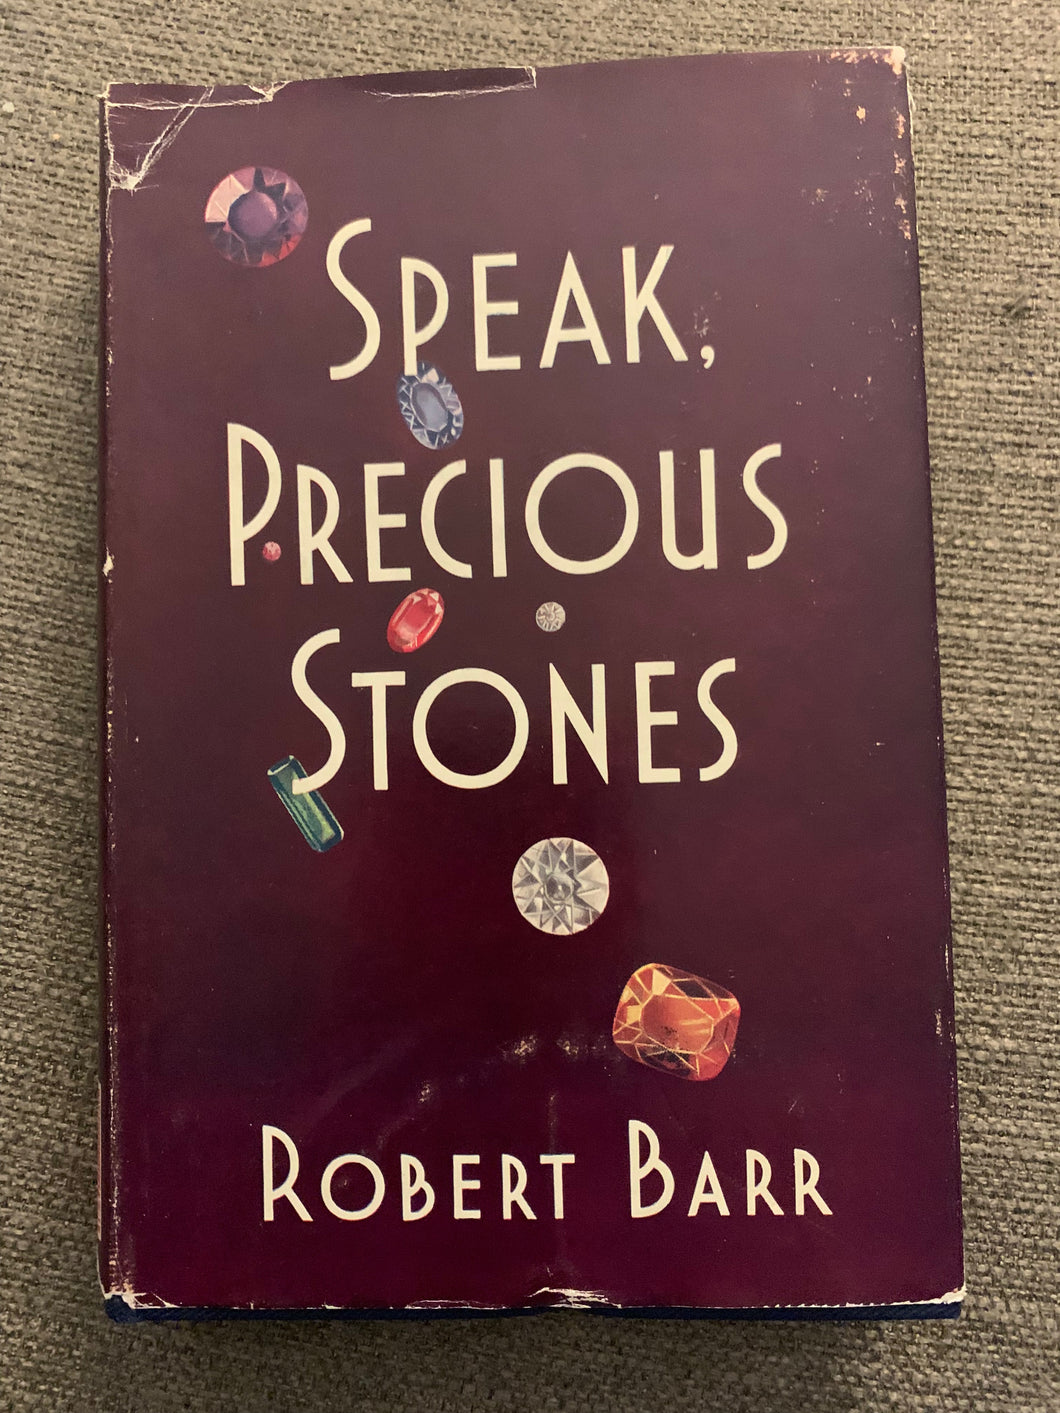 Speak Precious Stones by Robert Barr